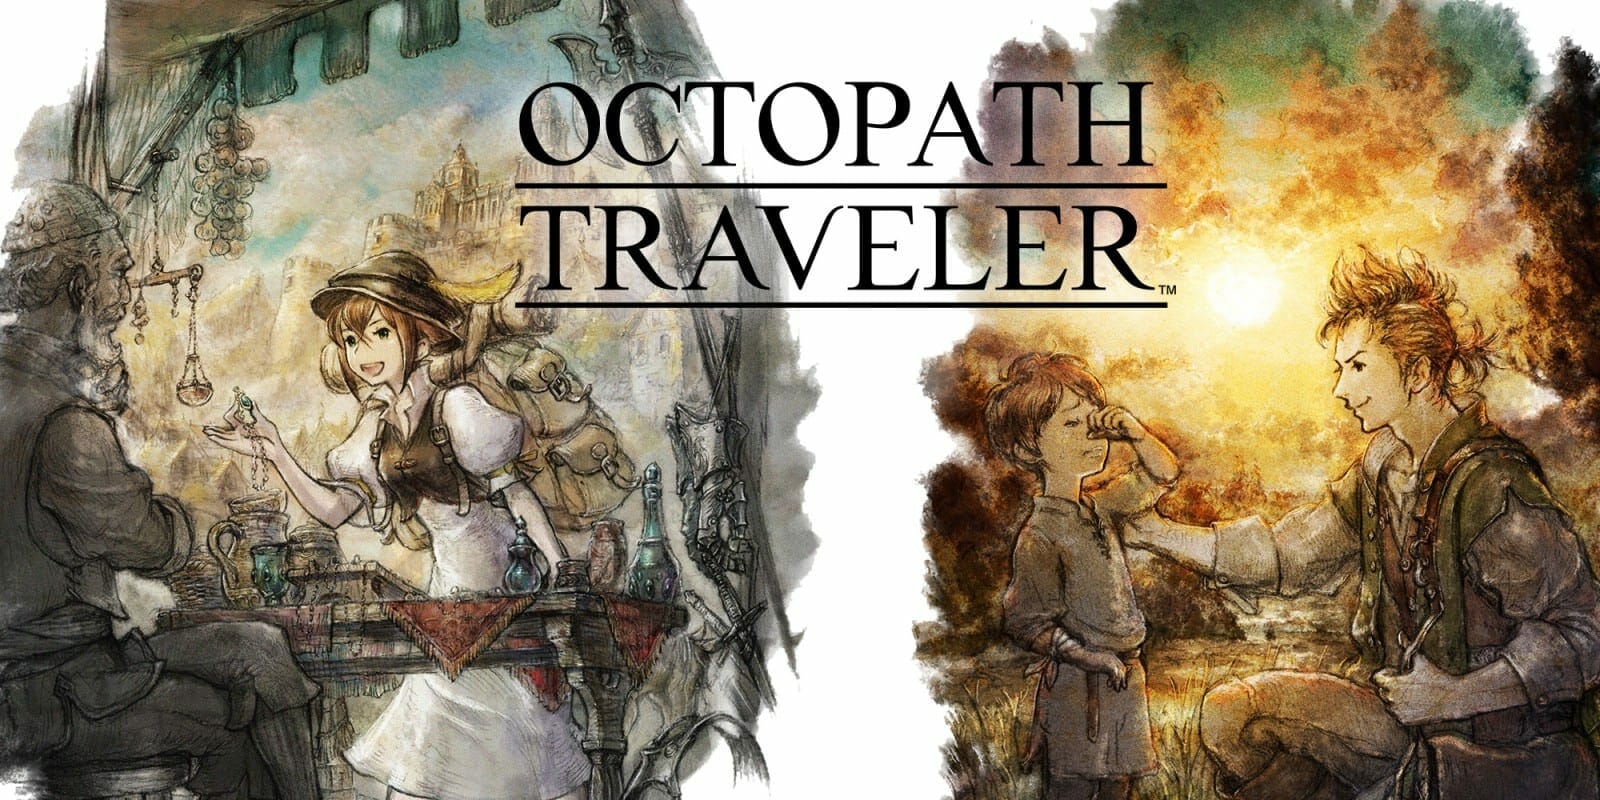 Octopath Traveler Rating